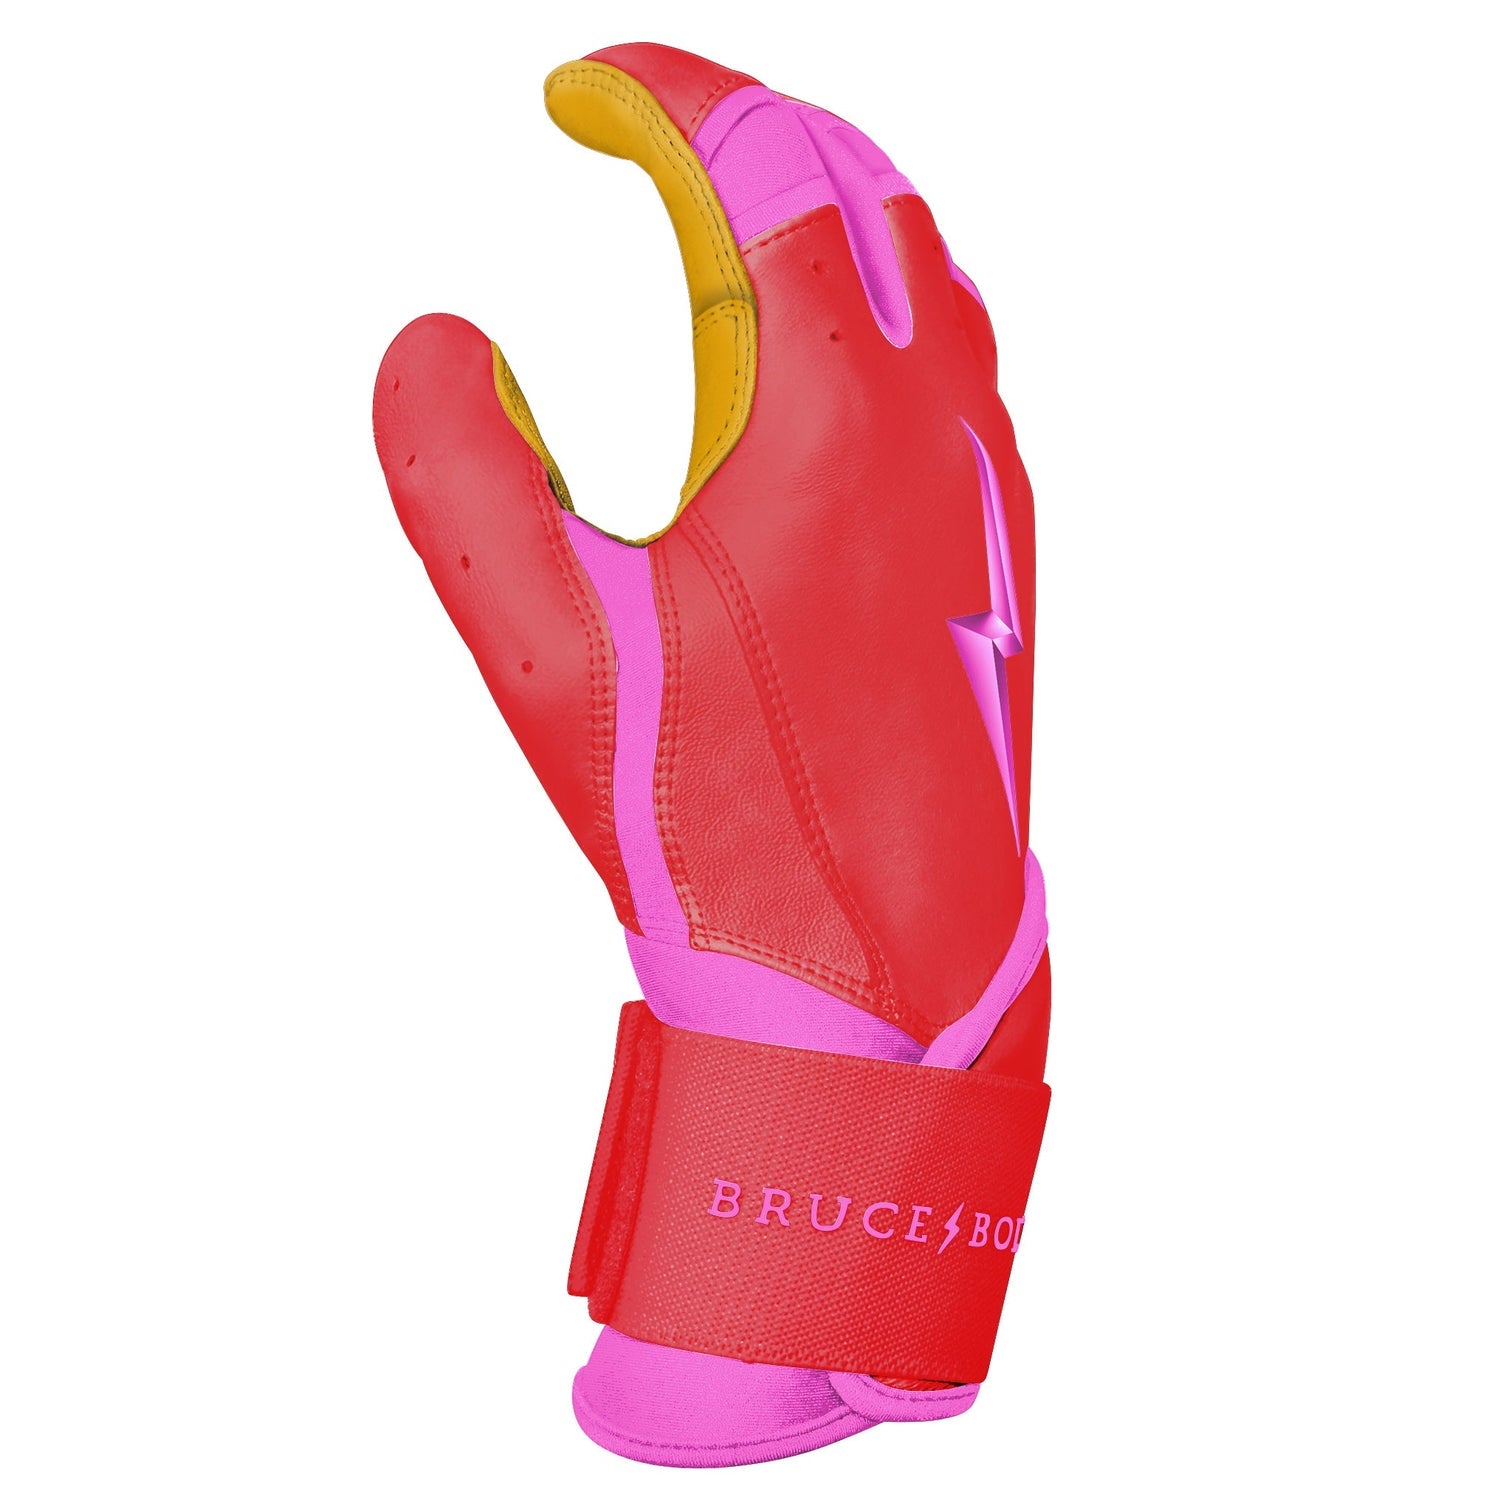 Bruce Bolt Premium Pro Bader Series Long Cuff Batting Gloves Pink